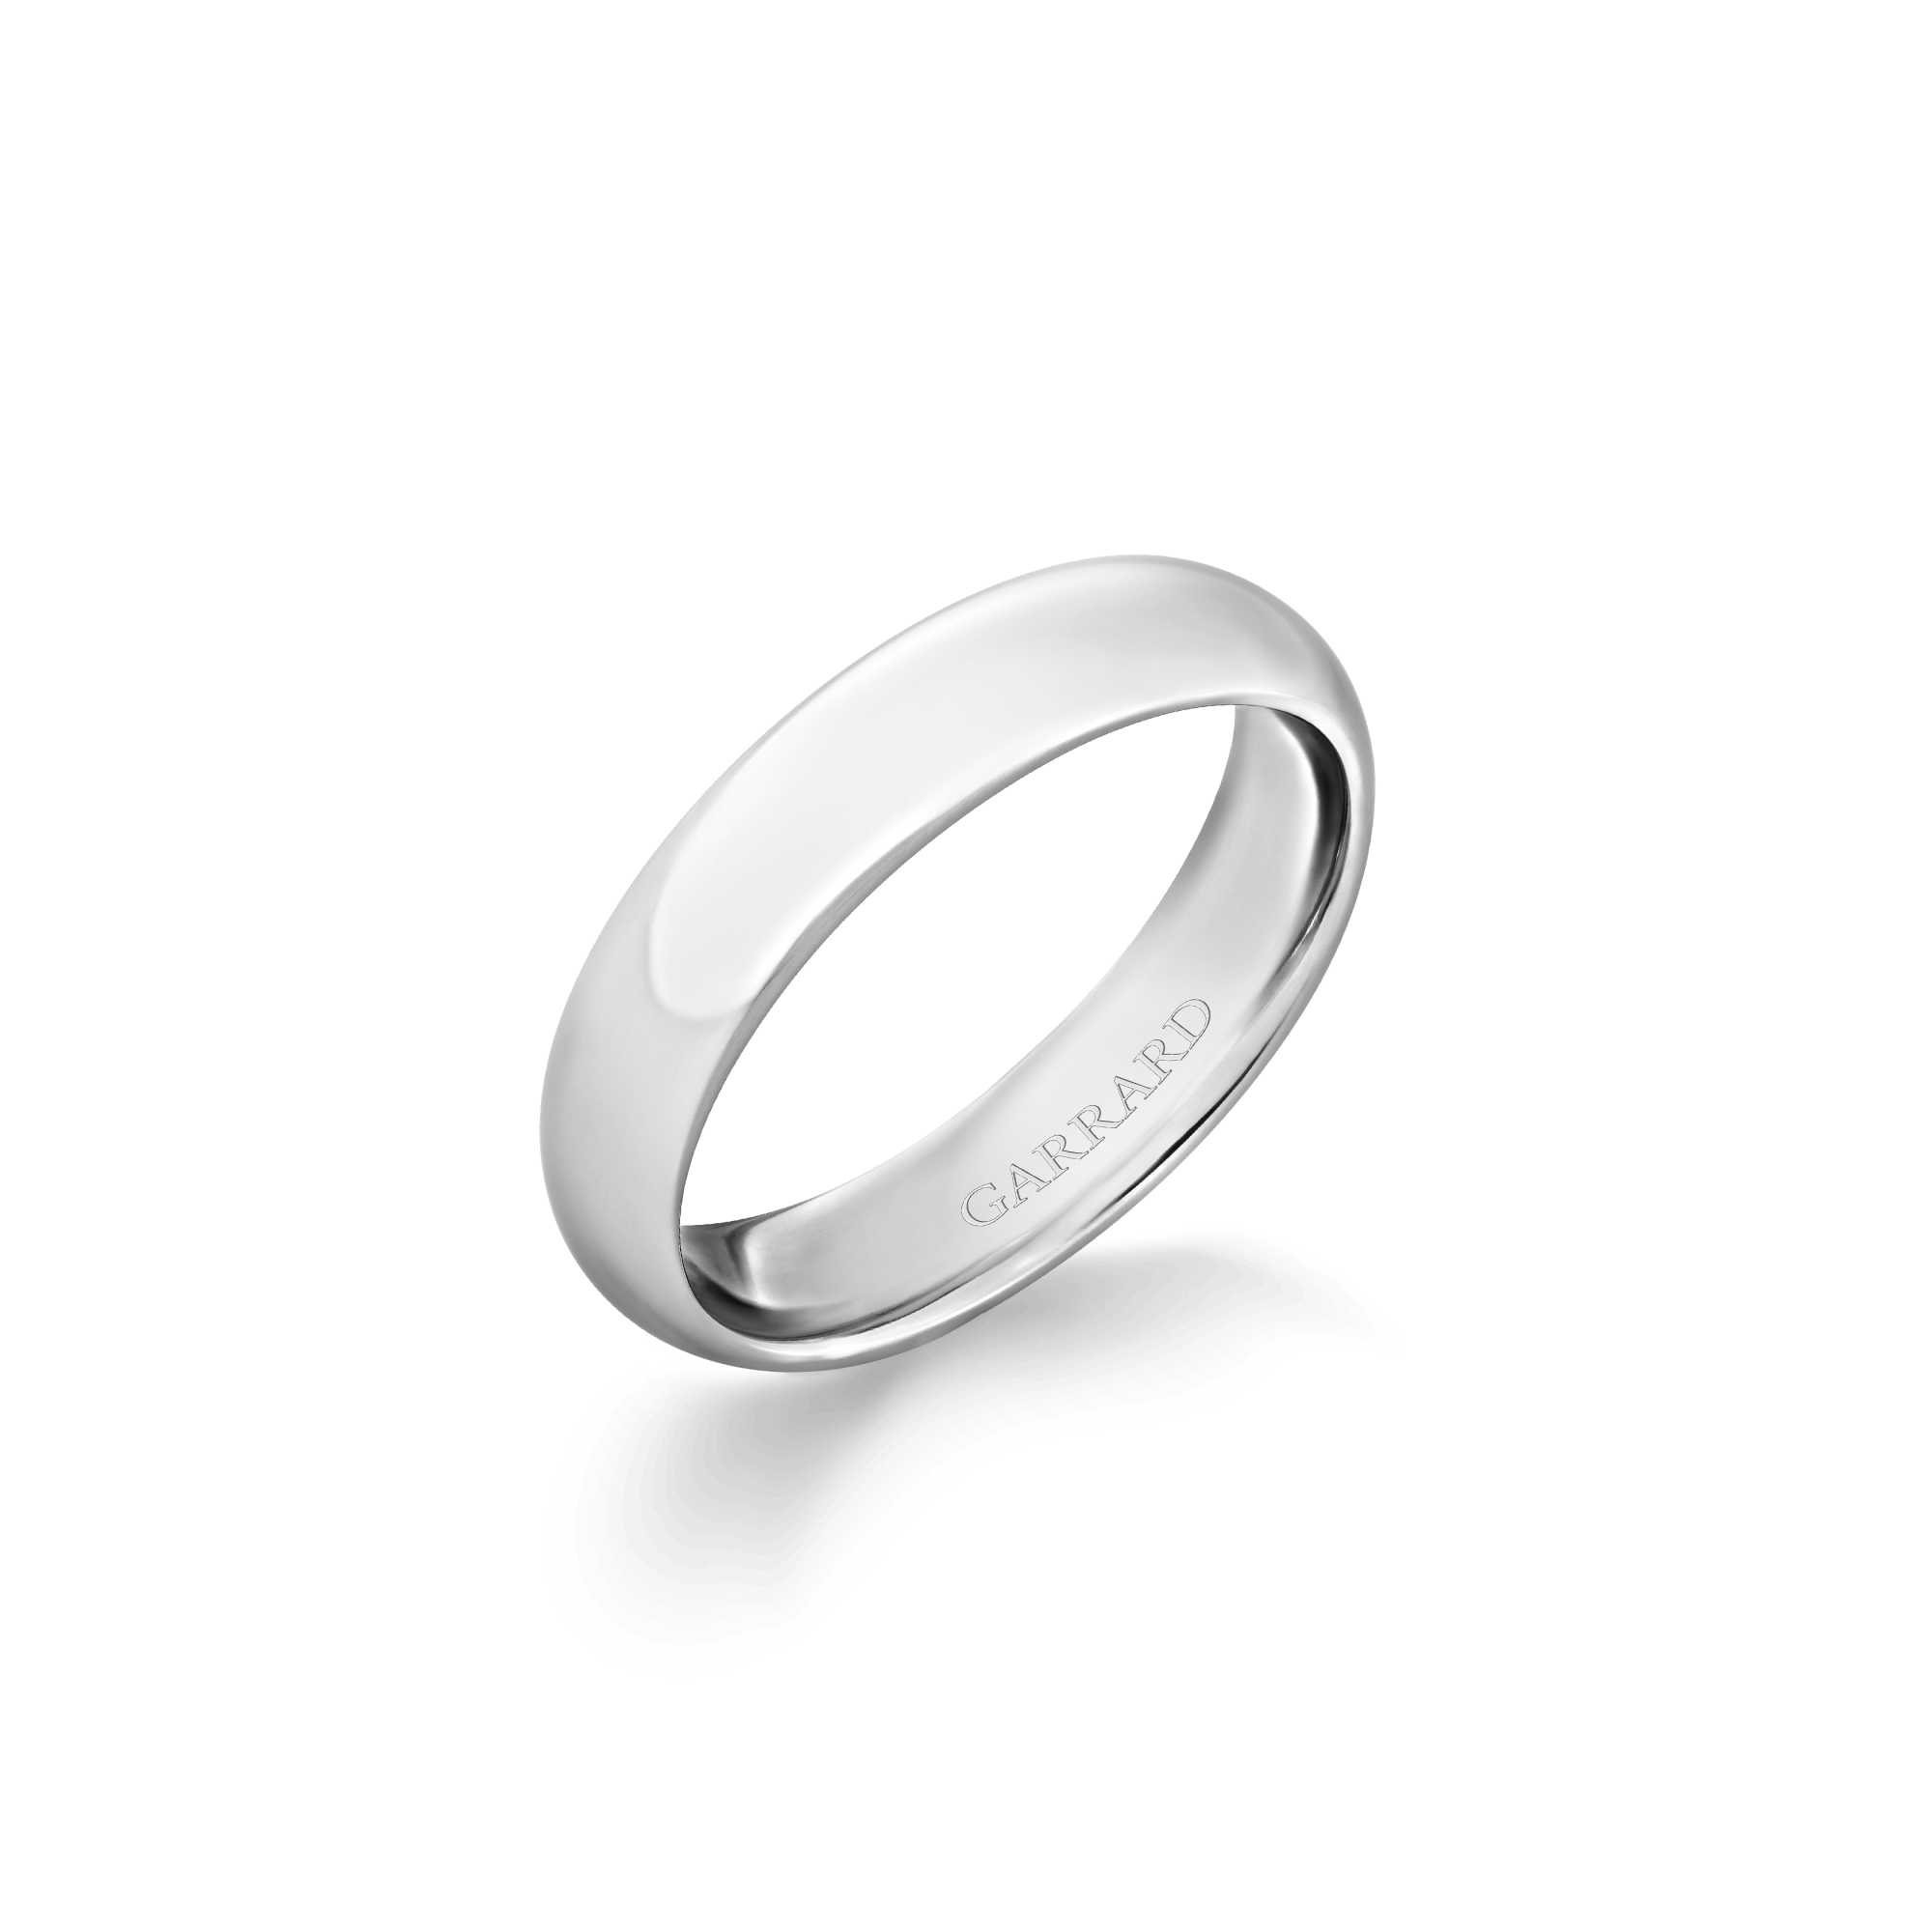 Garrard Classic Court Wedding Ring in Platinum 5mm 2017997008